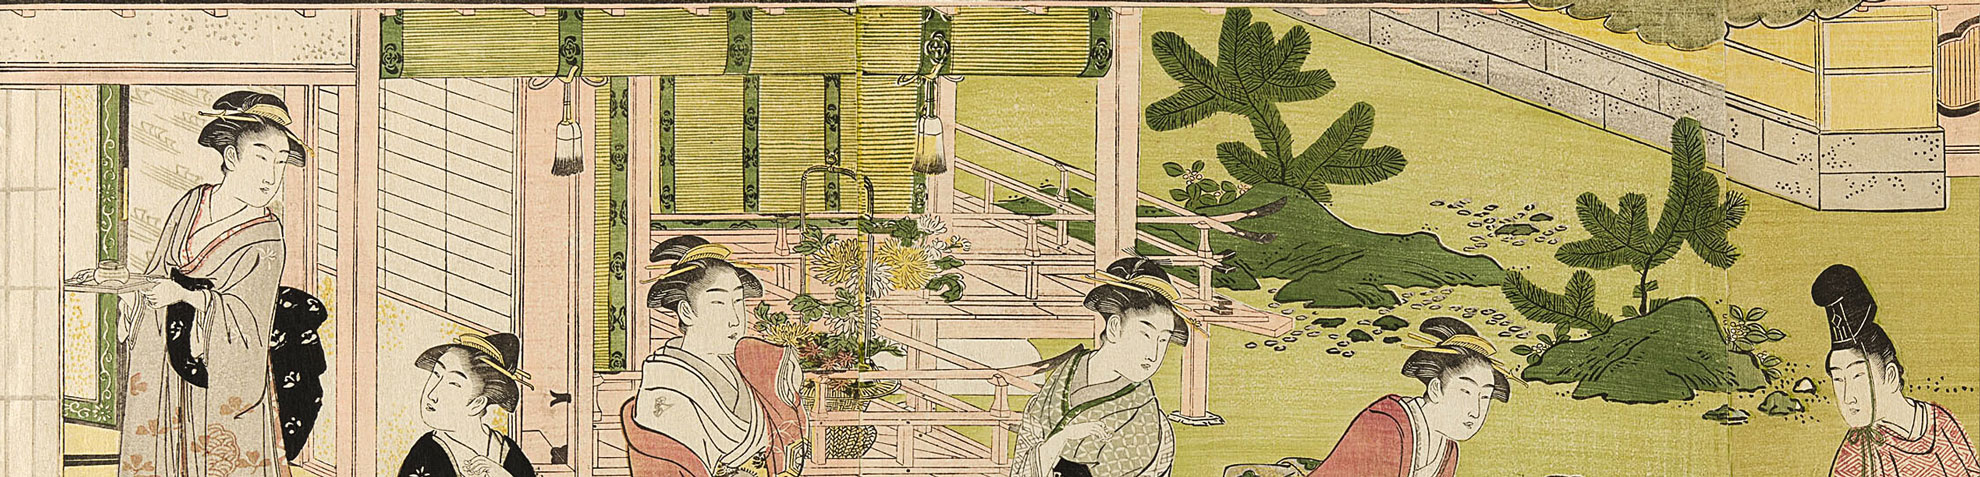 Chobunsai Eishi - Wakana, Part 1 (Wakana, jo), from the series “A Fashionable Parody of the Tale of Genji (Furyu yatsushi Genji)” (Detail) - 1784-1799. The Art Institute of Chicago.